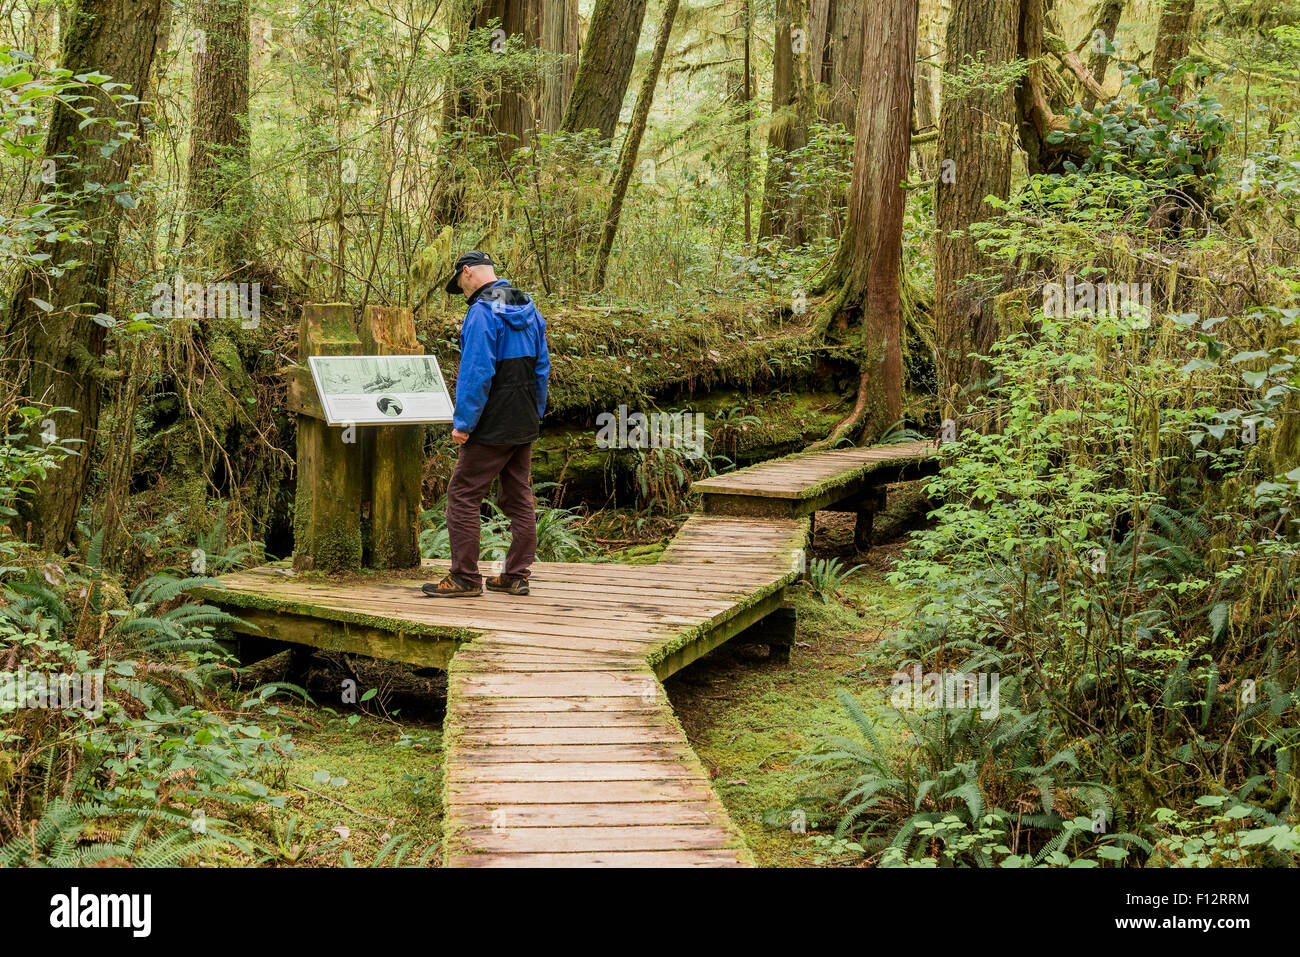 Man reading interpretive sign, Rainforest Trail, Pacific Rim National Park, British Columbia, Canada Stock Photo